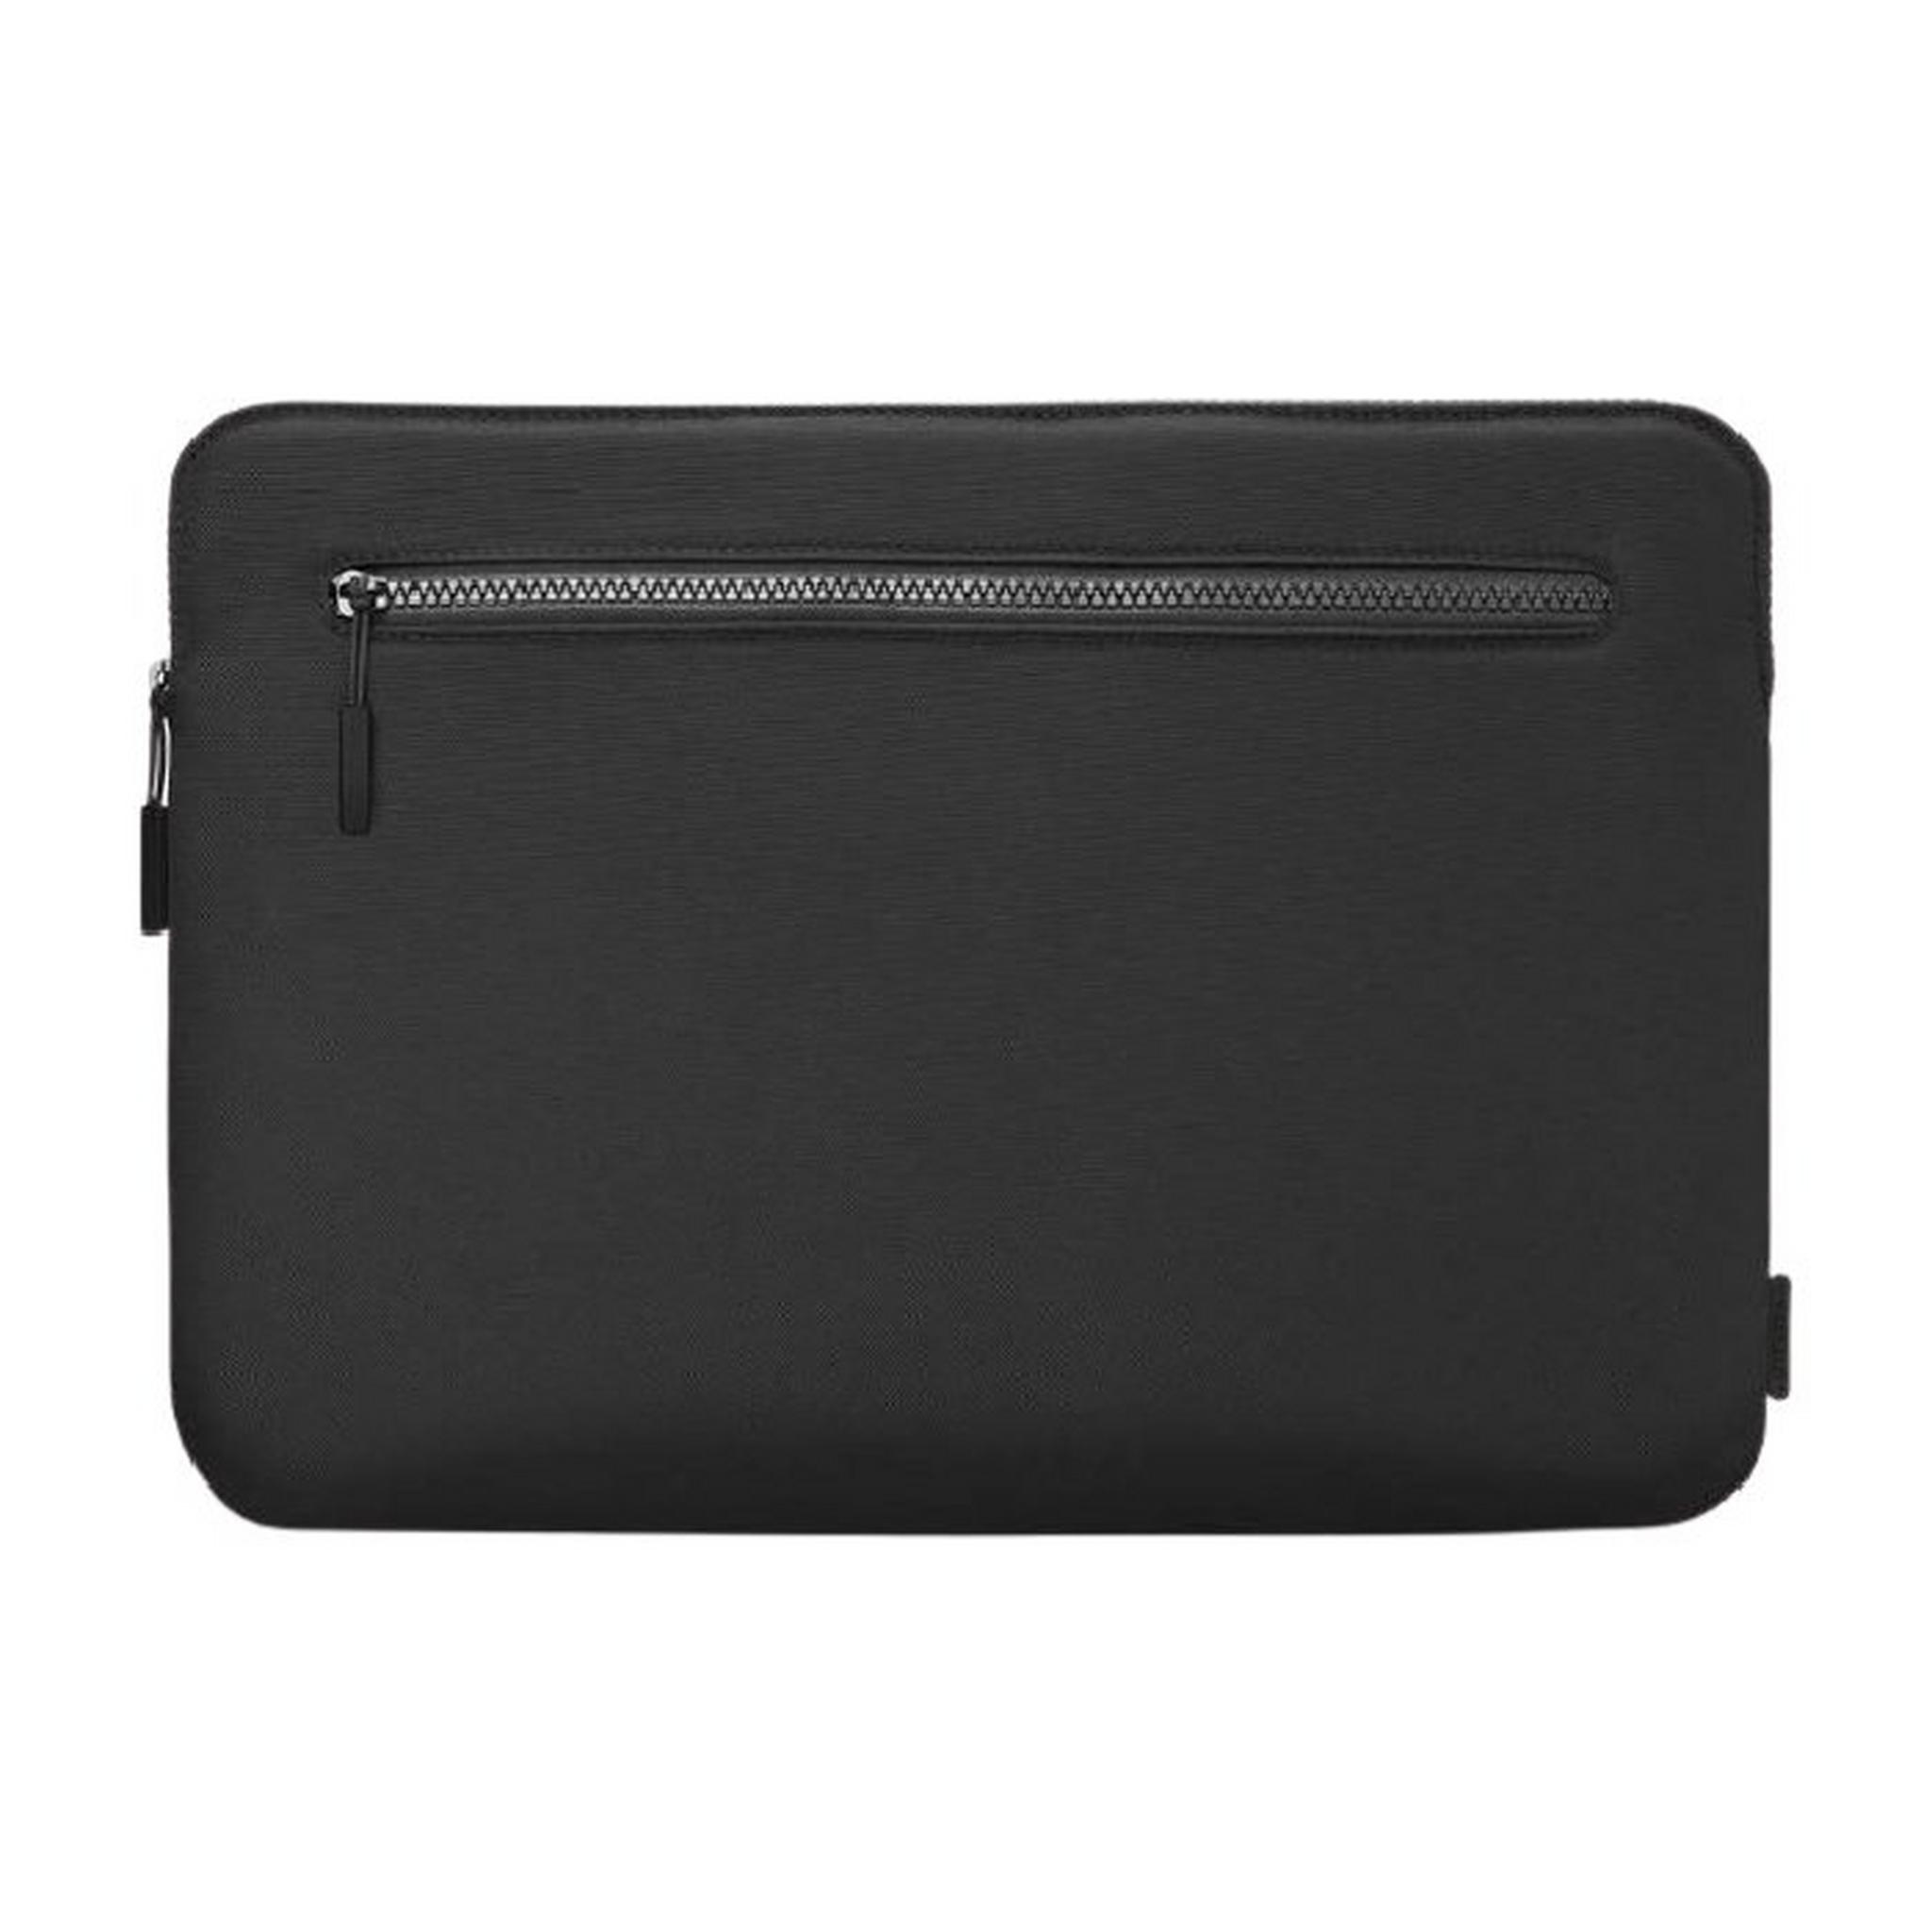 Pipetto MacBook Sleeve 15-inch Organiser - Black